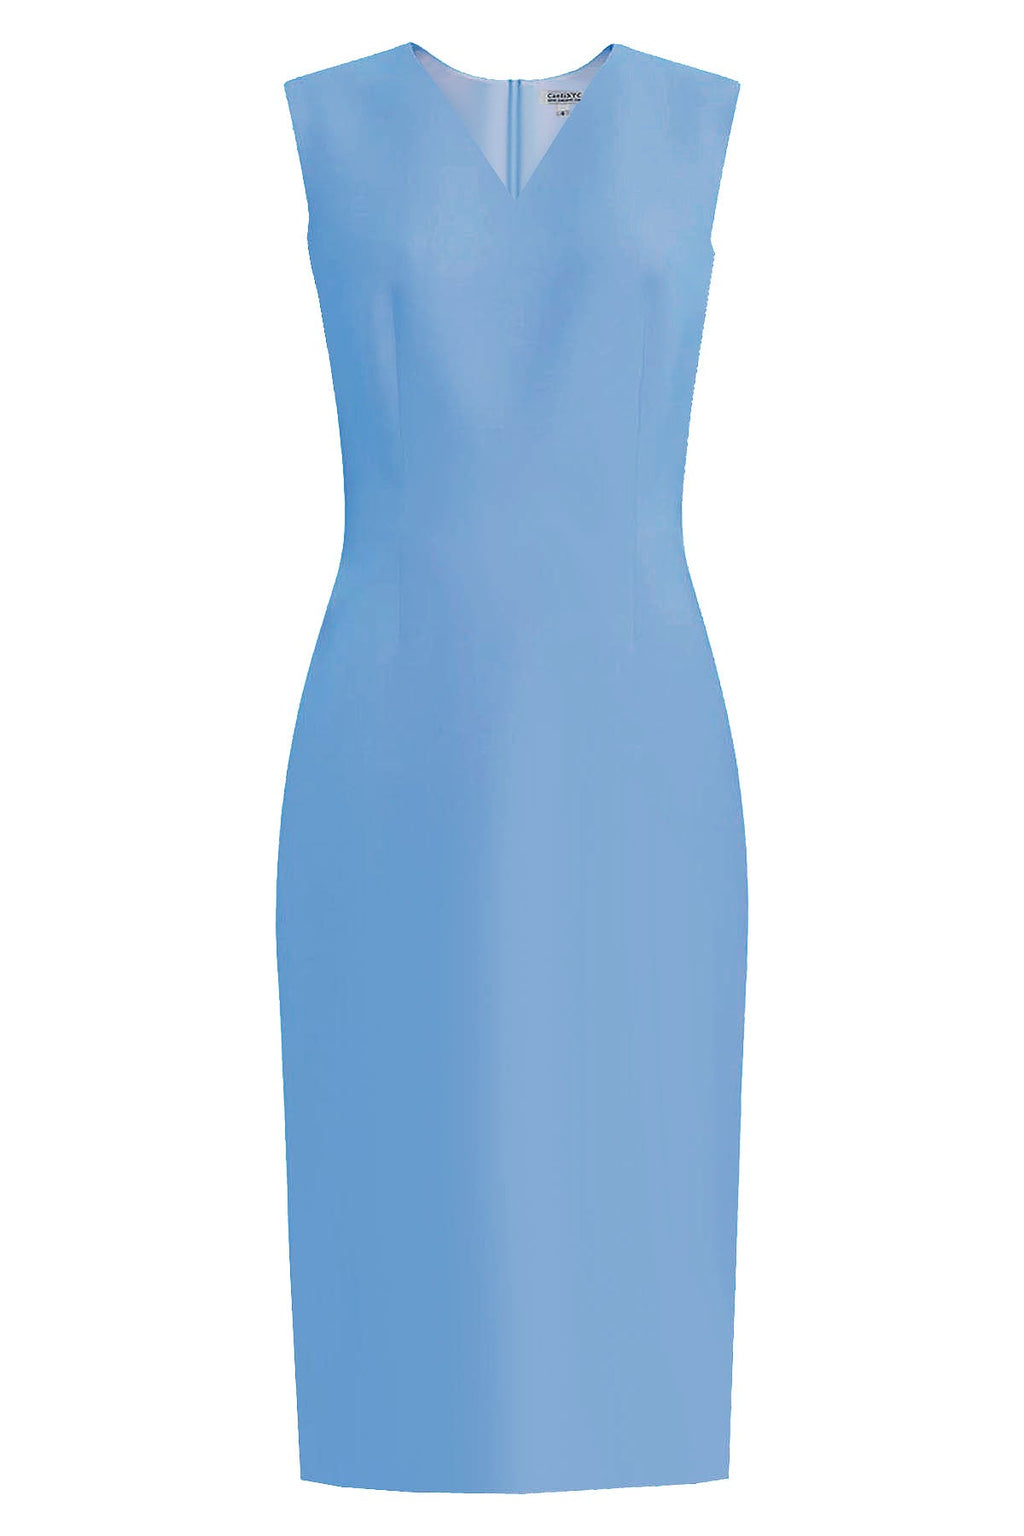 CaeliNYC Kateri Light Blue V-Neck Sheath Dress